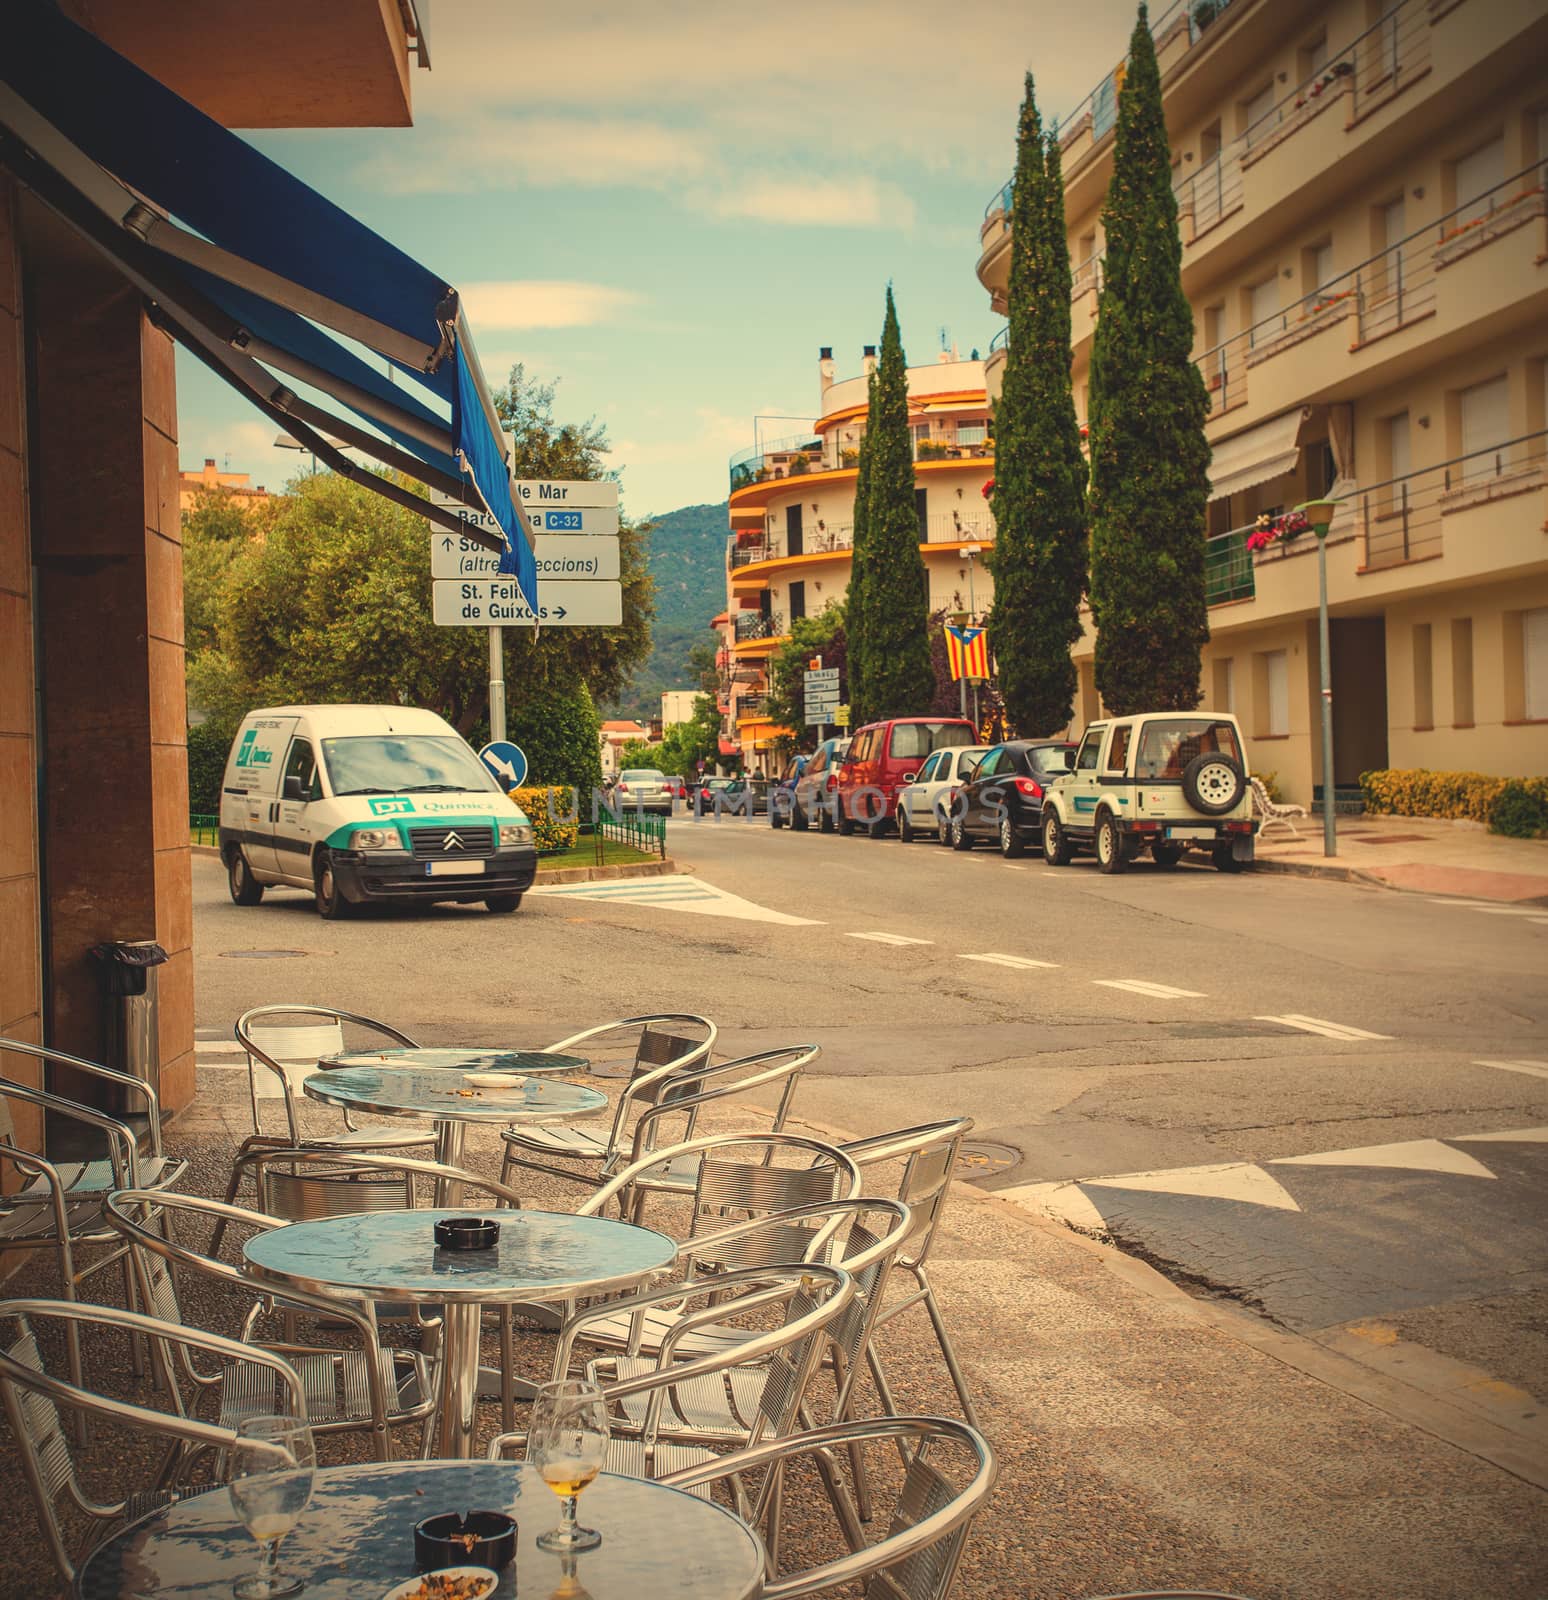 Spain, Catalonia - JUNE 20, 2013: Avenida Pelegri street in the Tossa de Mar town. Instagram image style